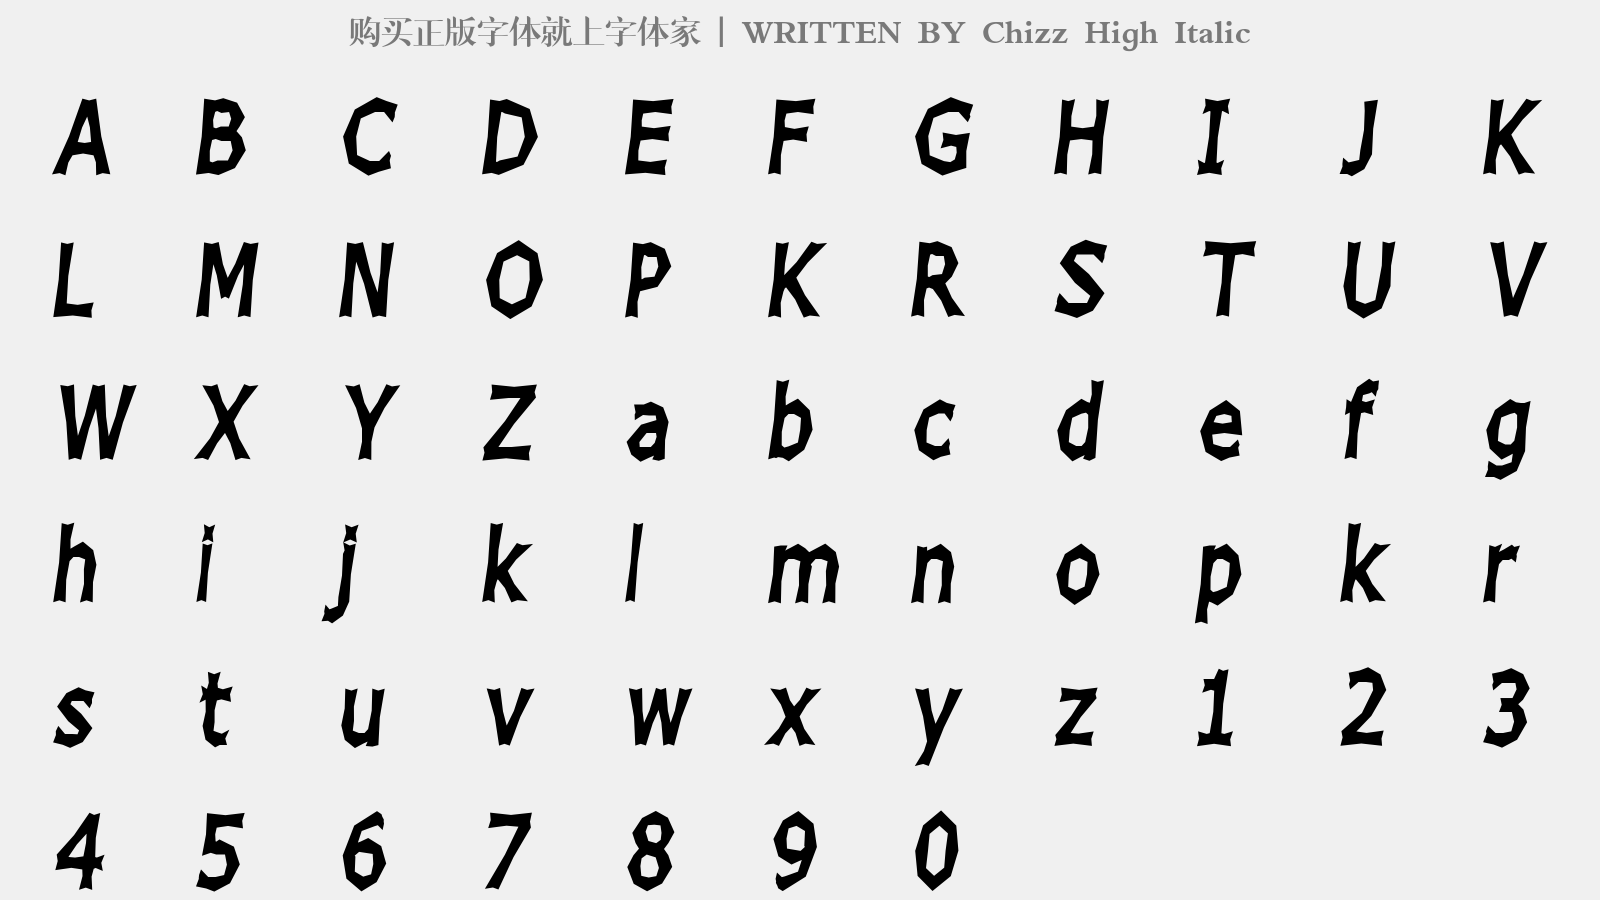 Chizz High Italic - 大写字母/小写字母/数字